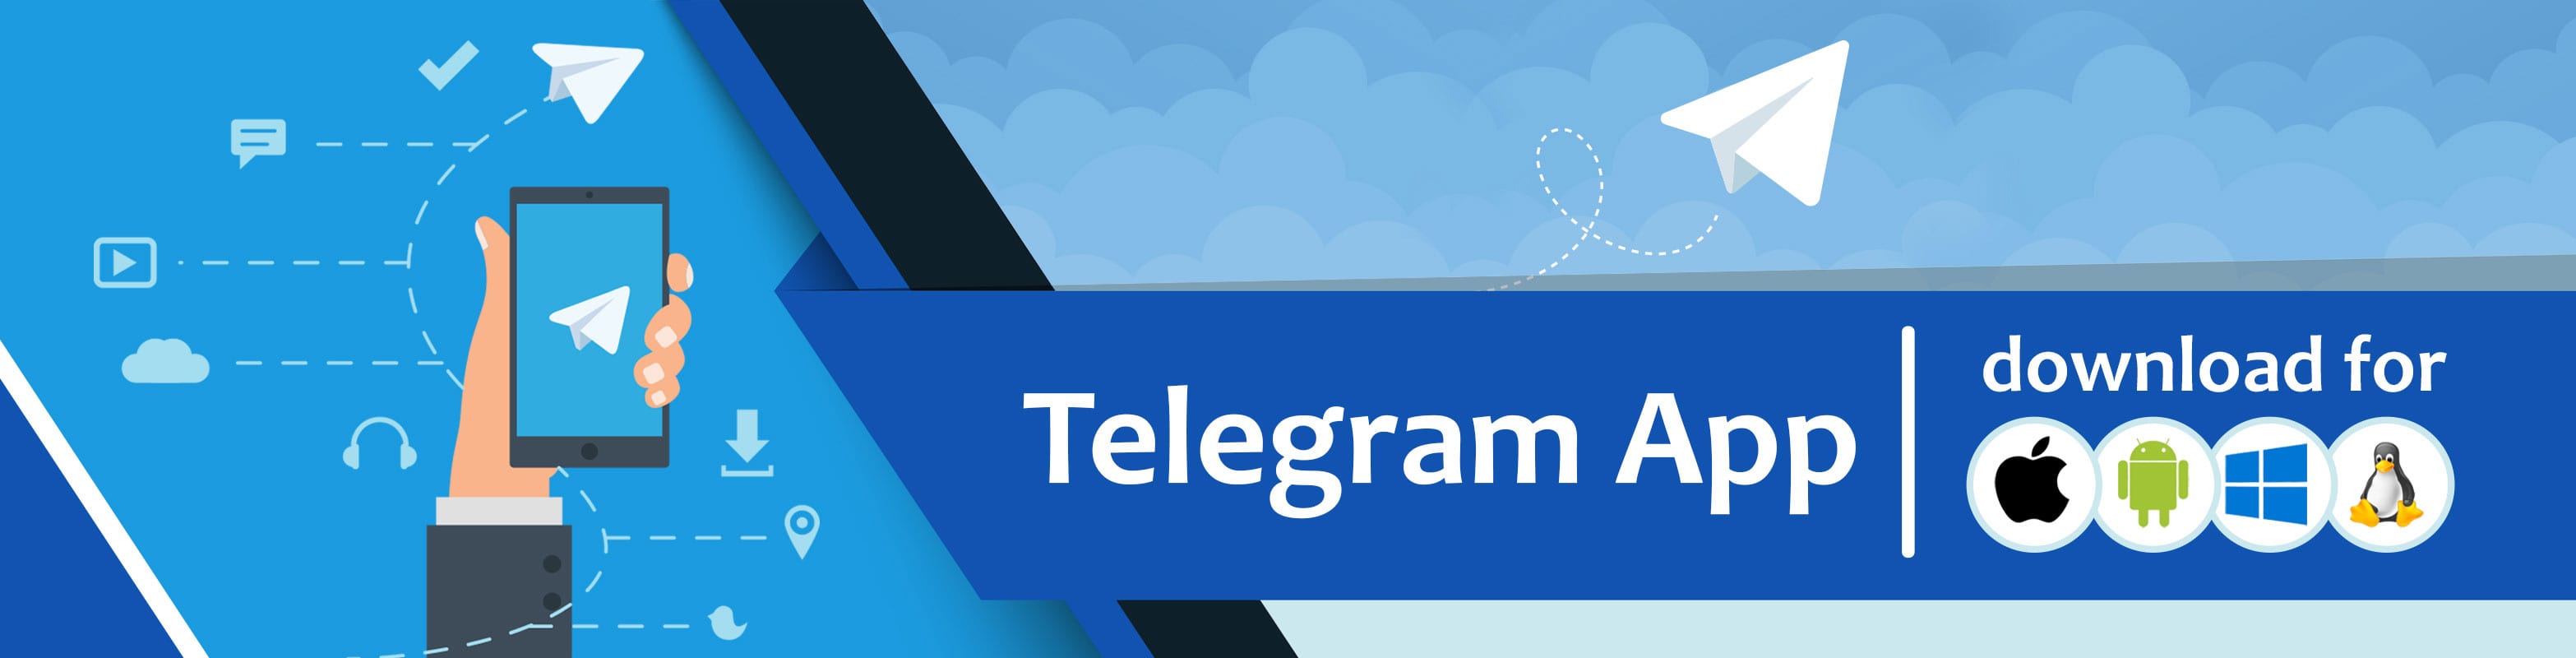 telegram download portable